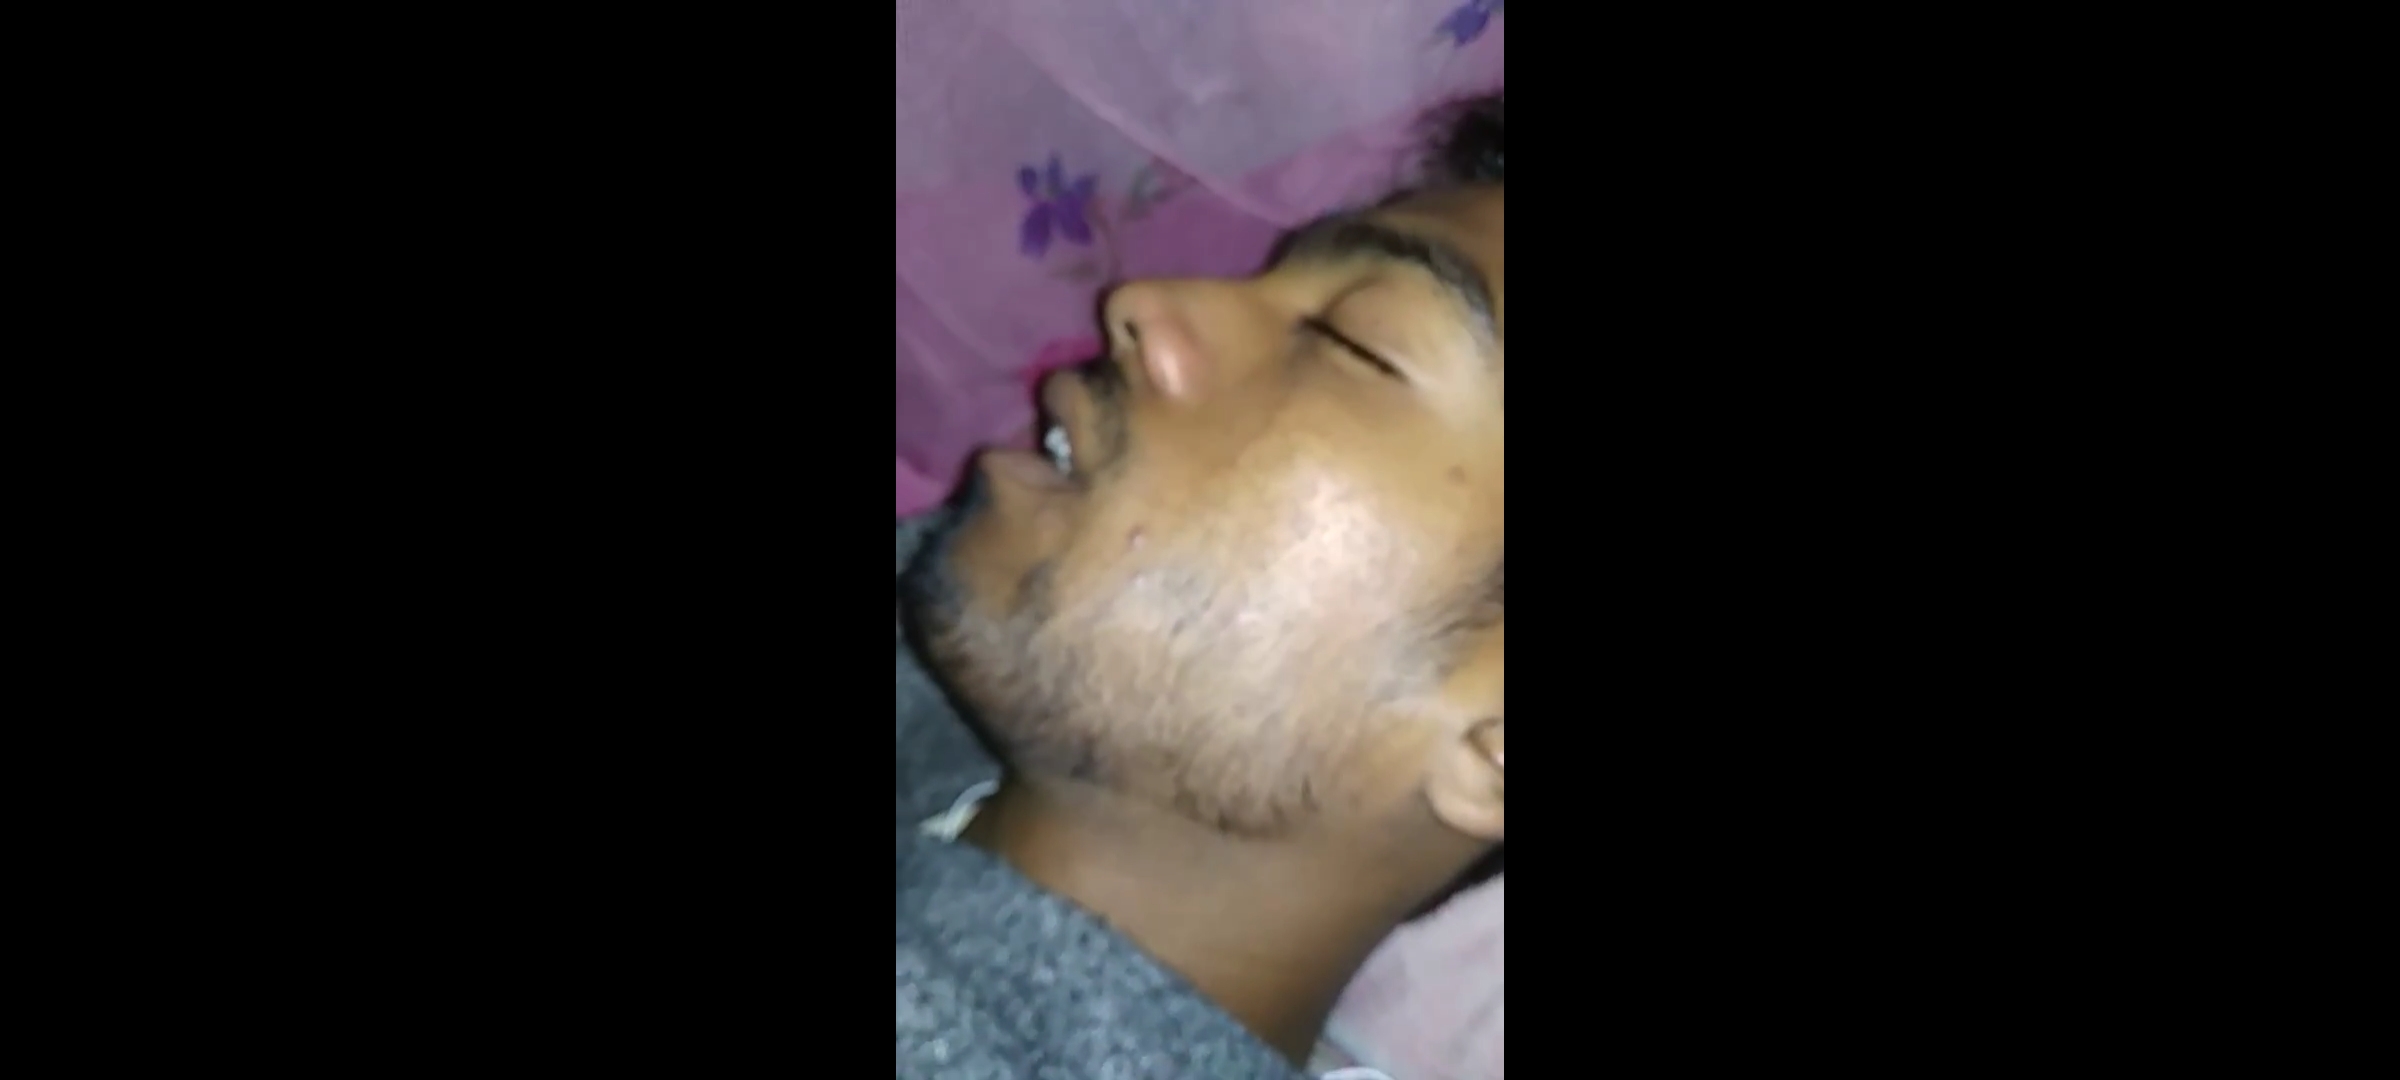 Male snoring (Asian version) - video 2